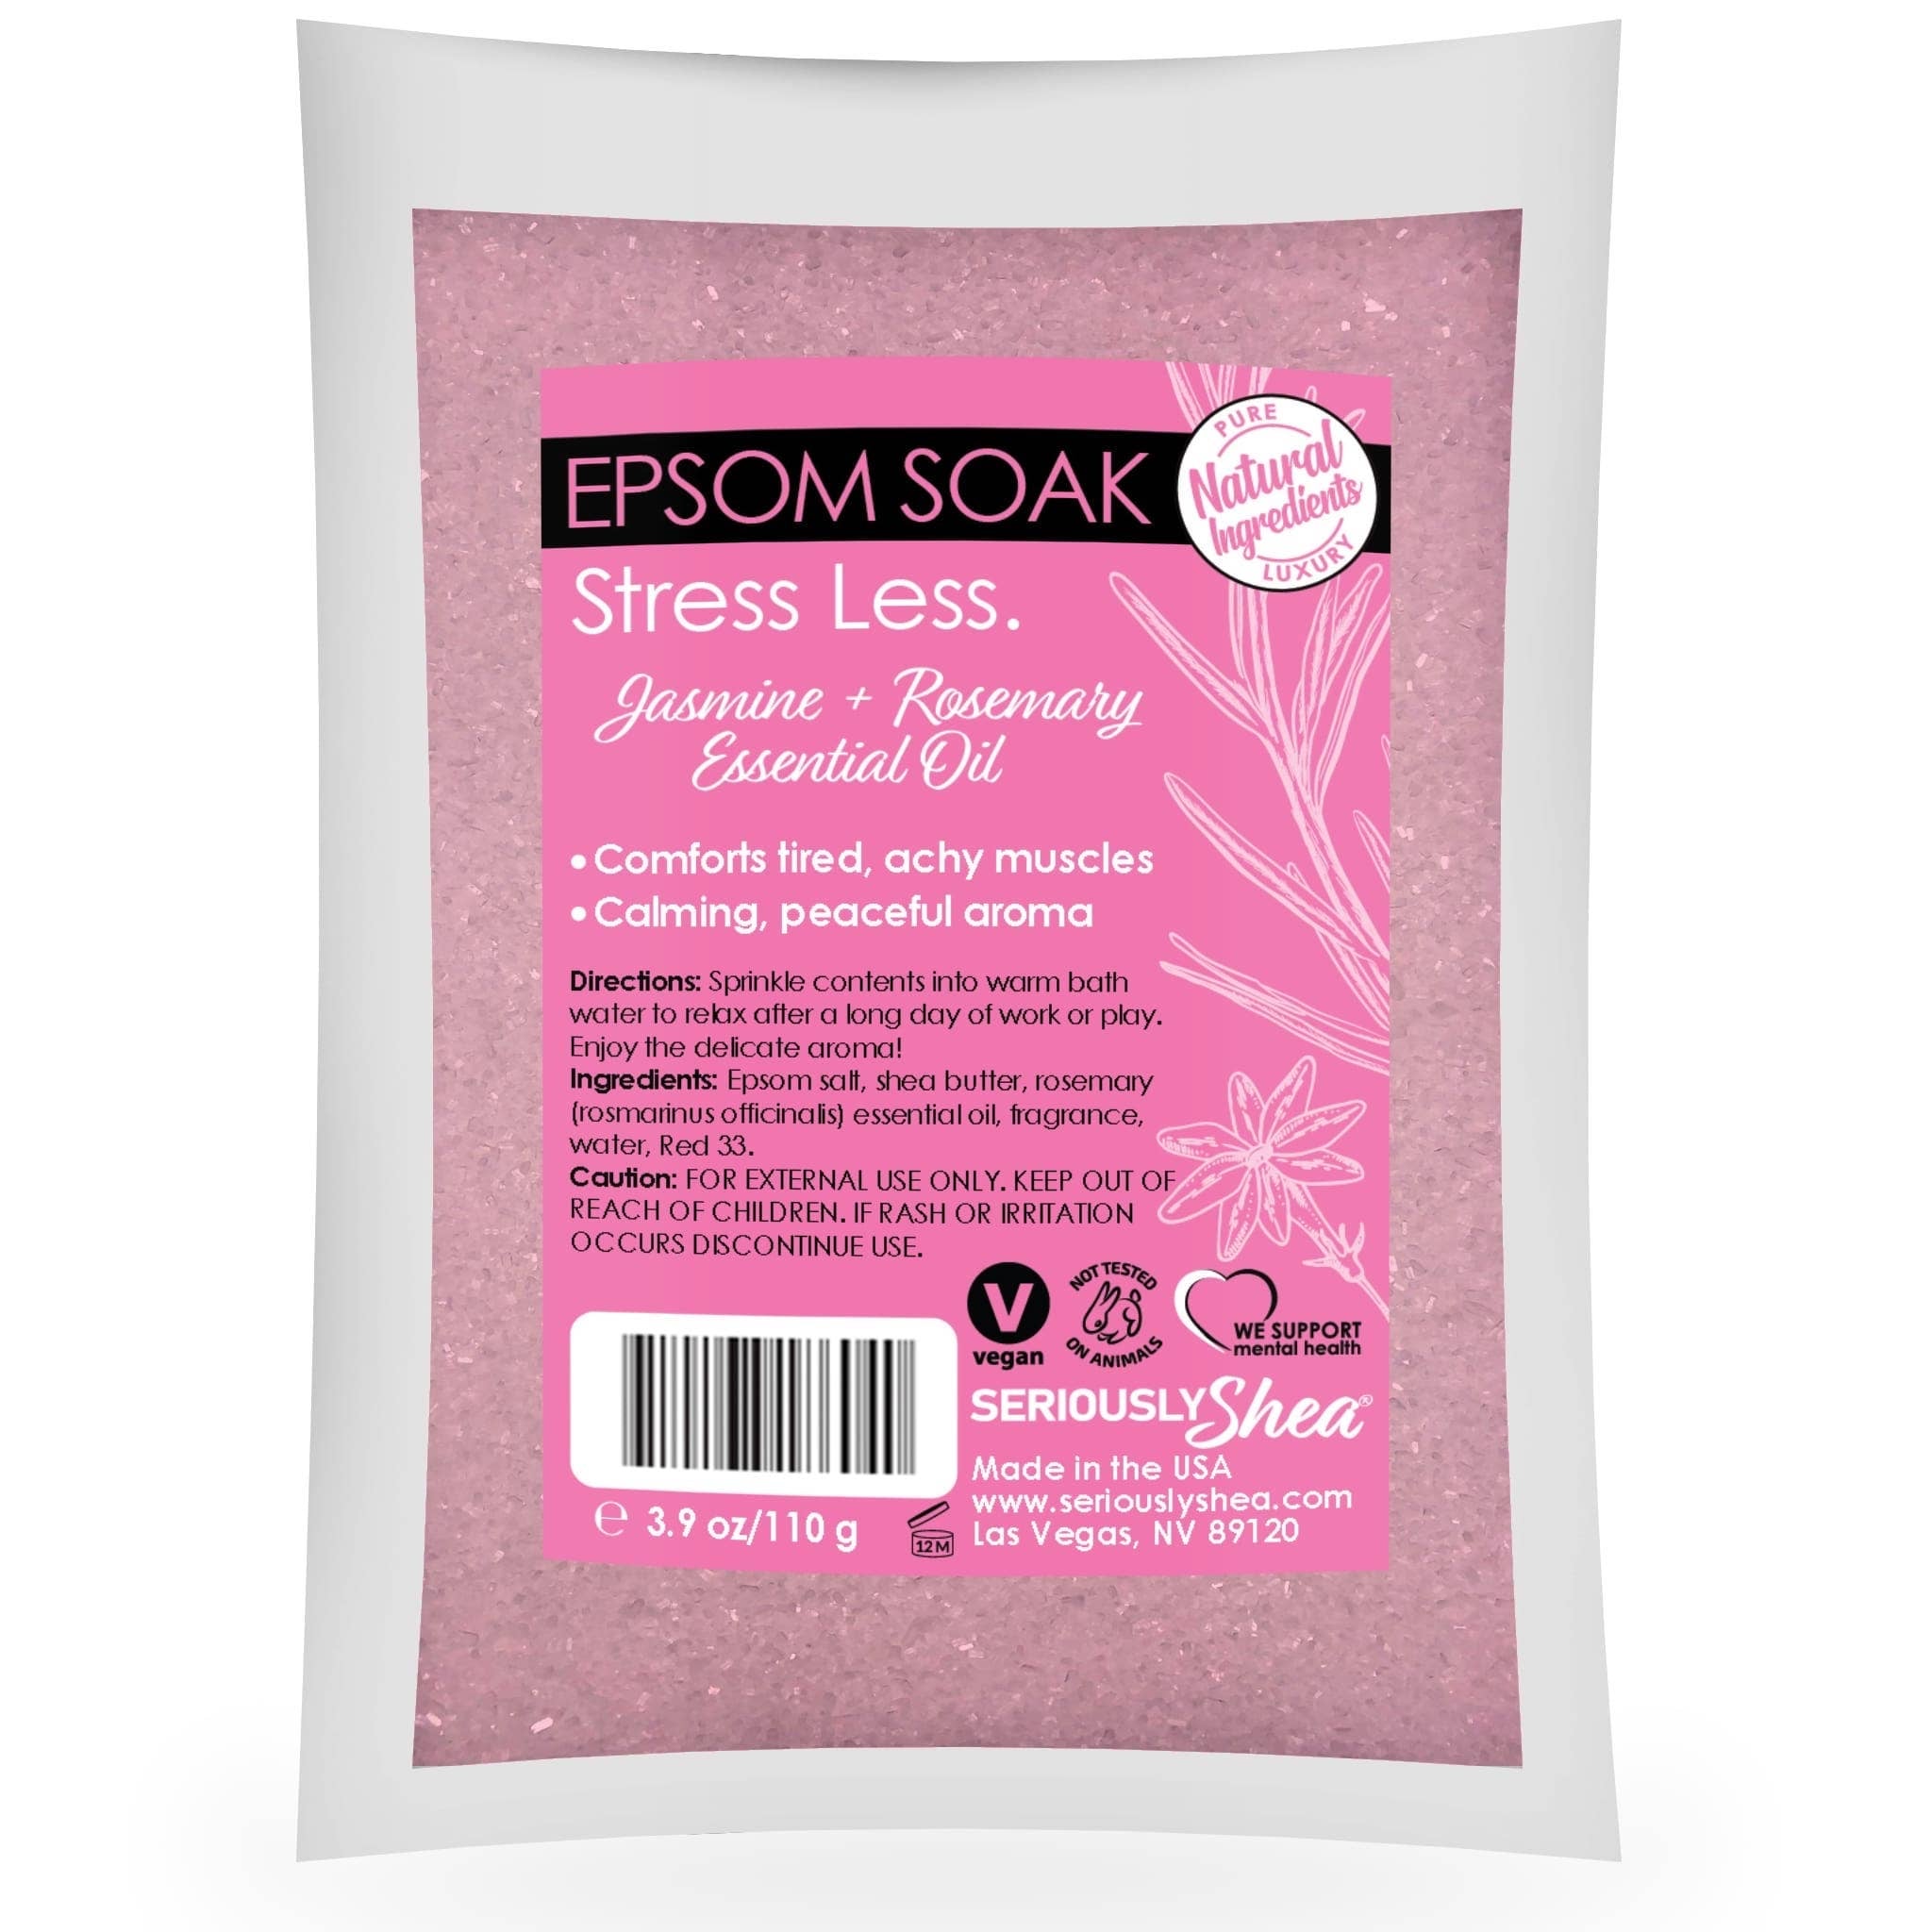 Stress Less Epsom Soak